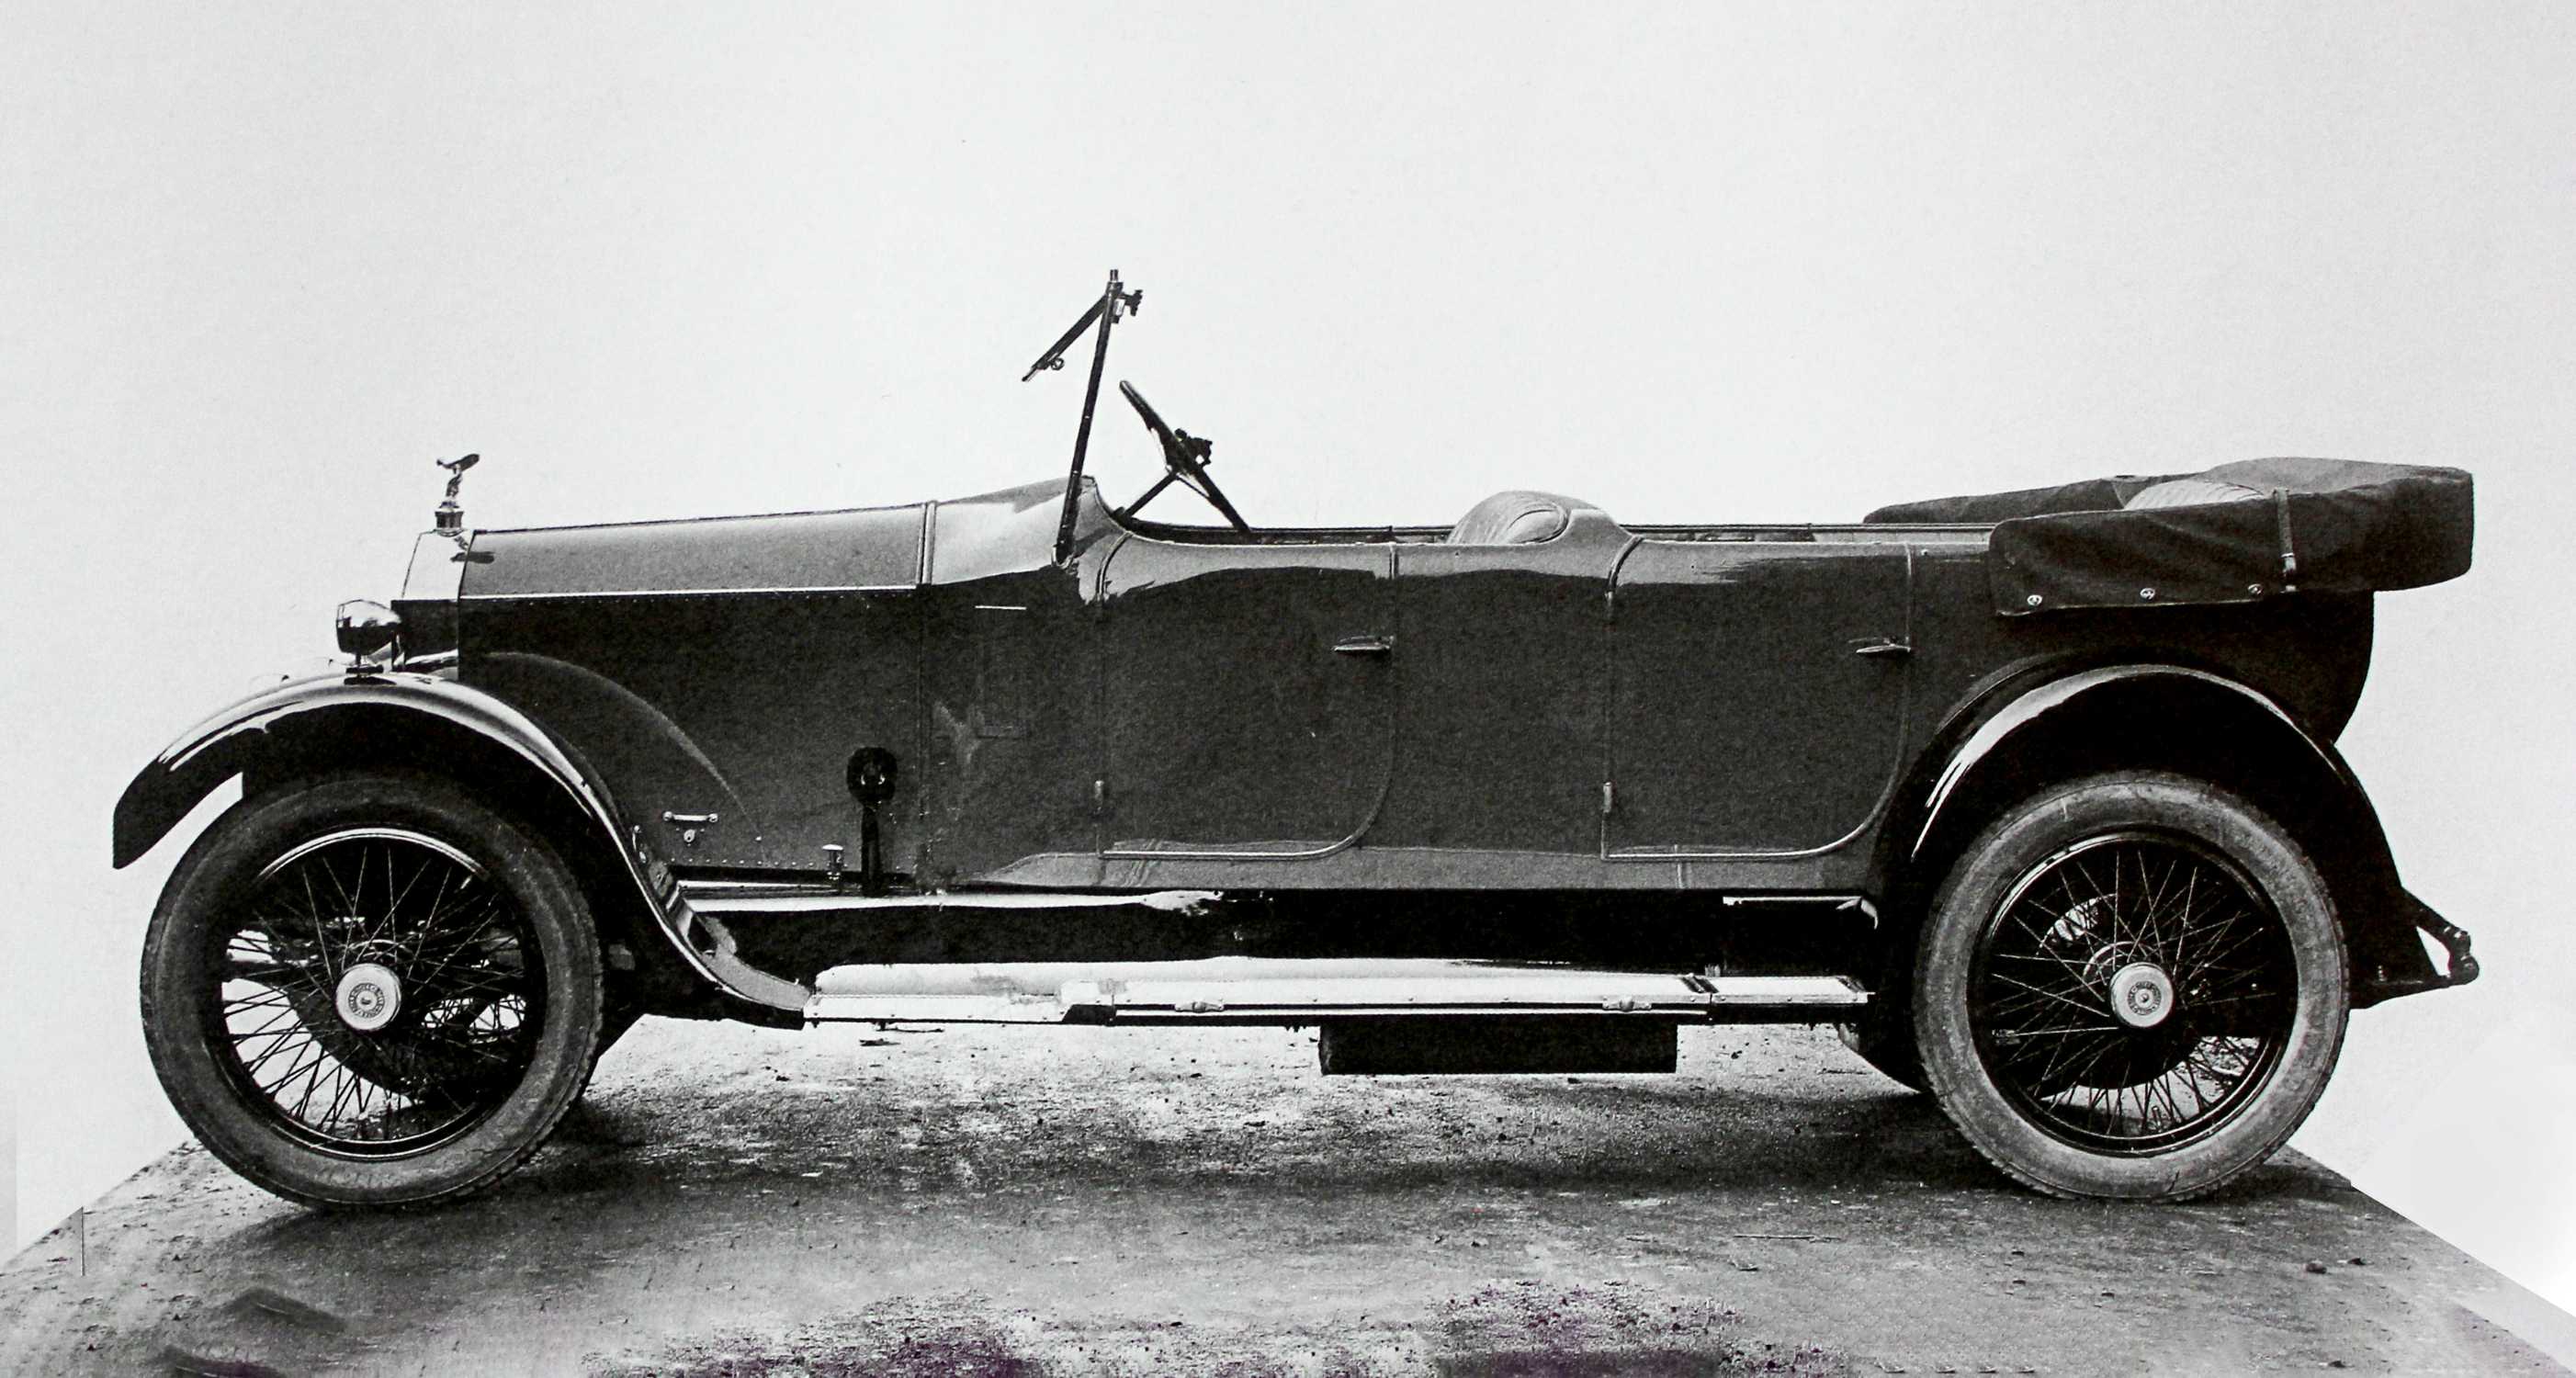 1924 ROLLS-ROYCE 20 H.P. (GRK50)